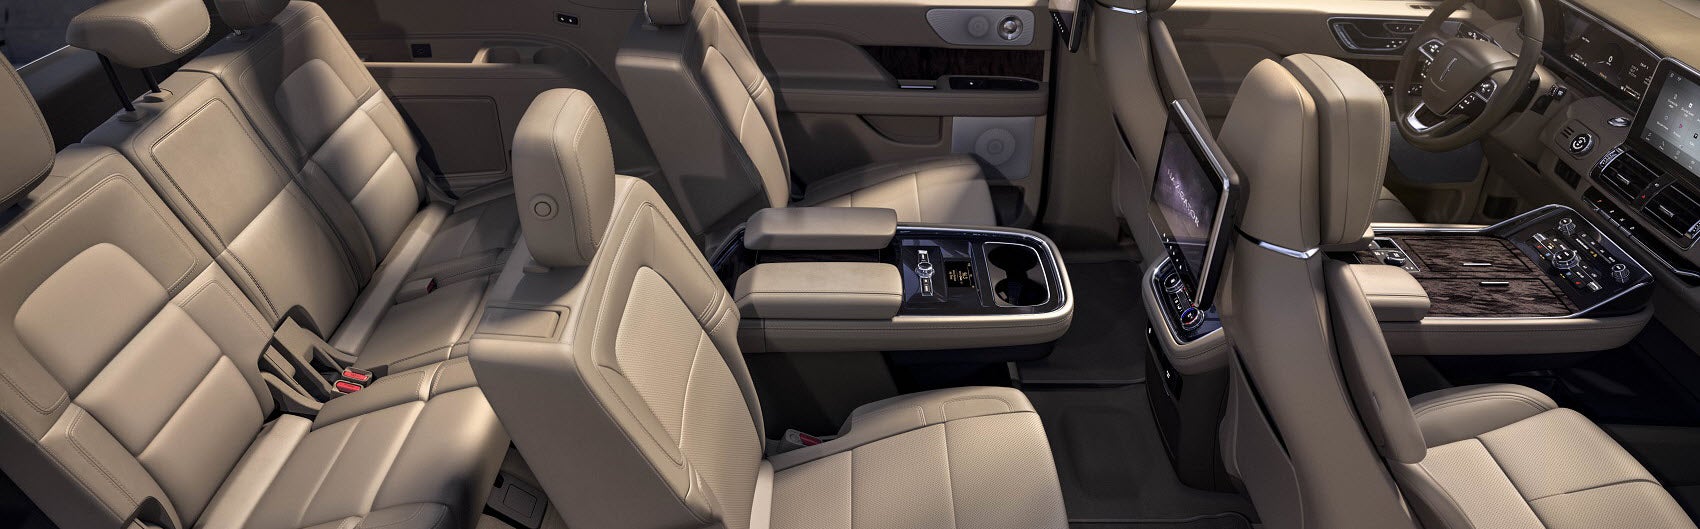 2020 Lincoln Navigator Interior Comfort